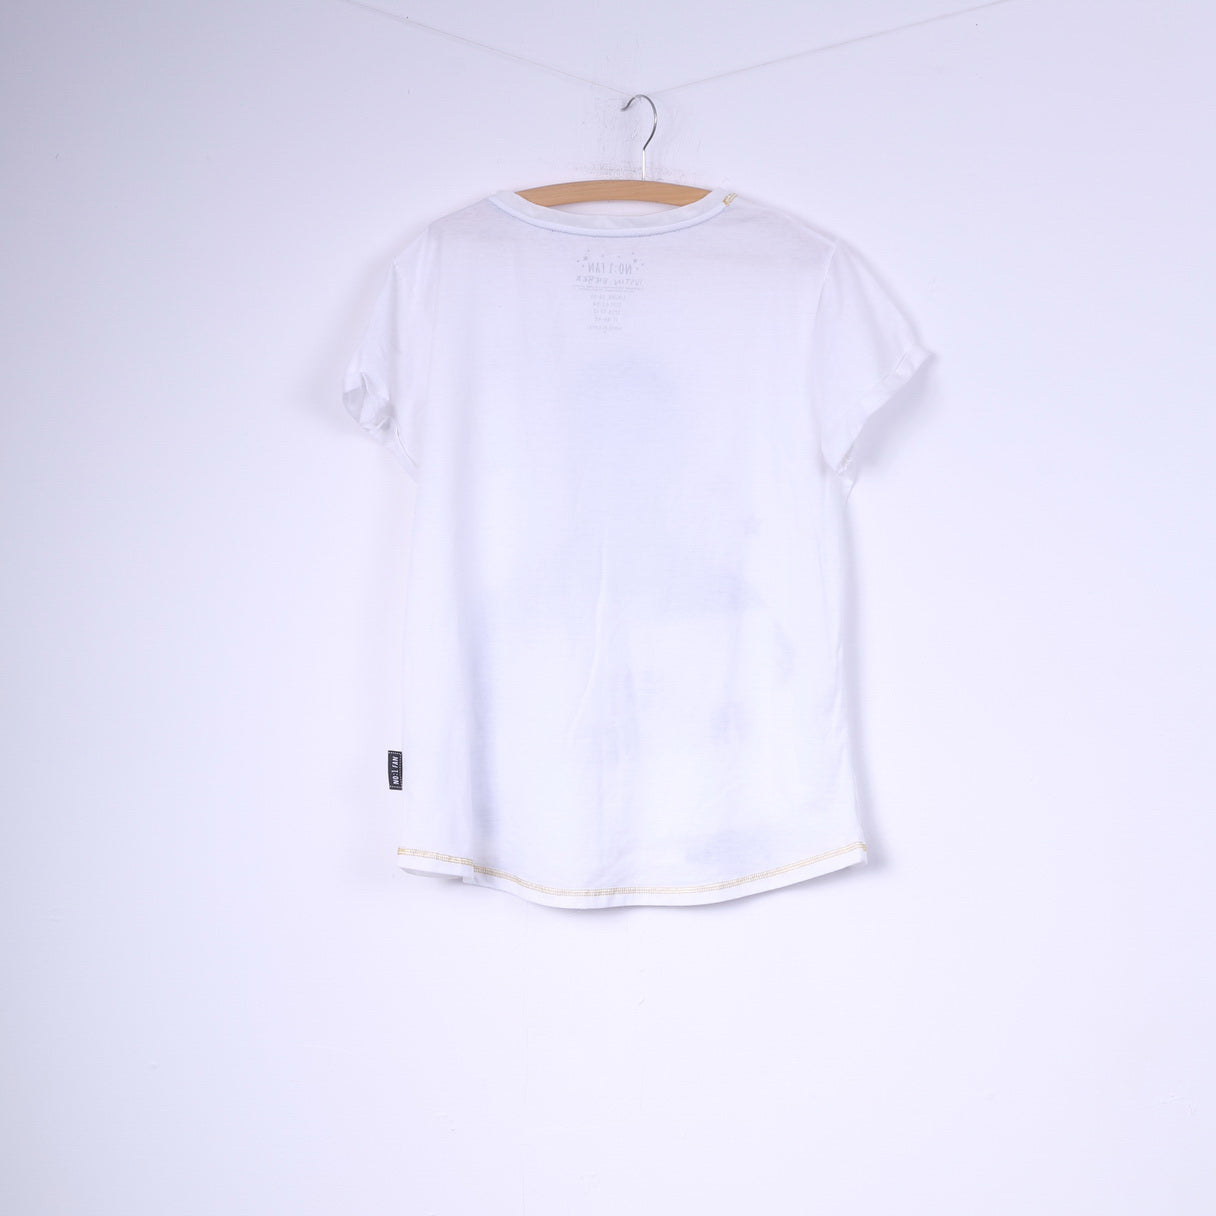 Primark Justin Bieber Donna 14-16 42-44 XL T-shirt grafica in cotone bianco Top 